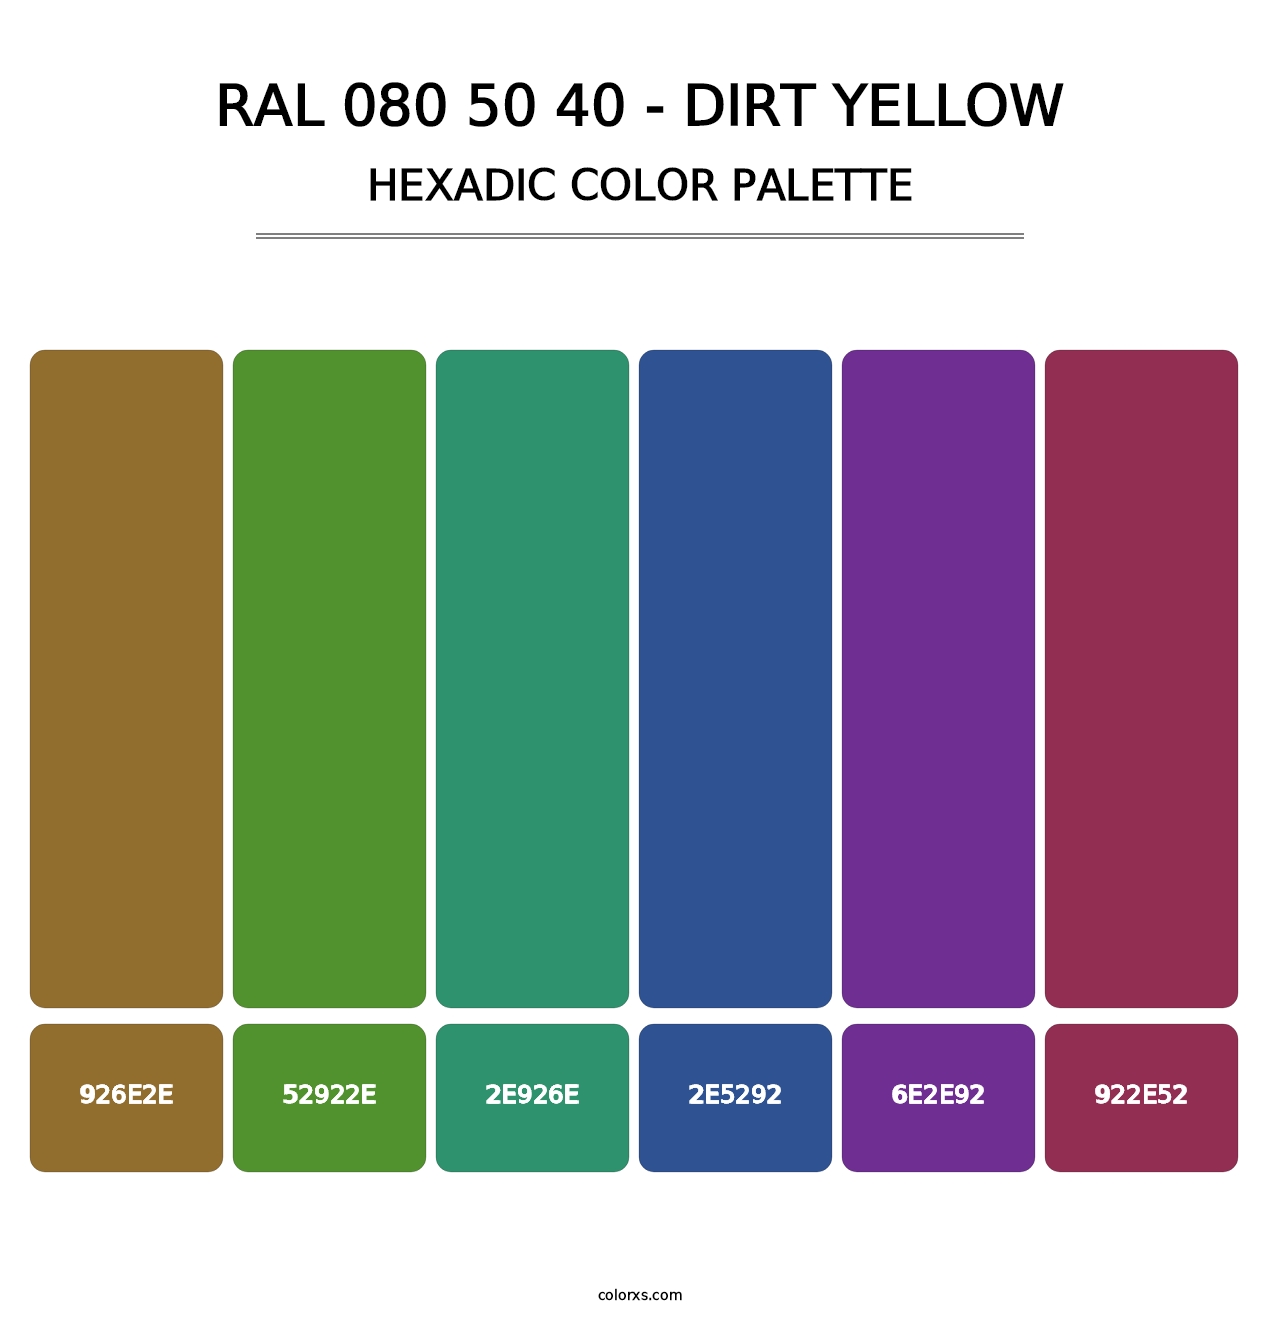 RAL 080 50 40 - Dirt Yellow - Hexadic Color Palette